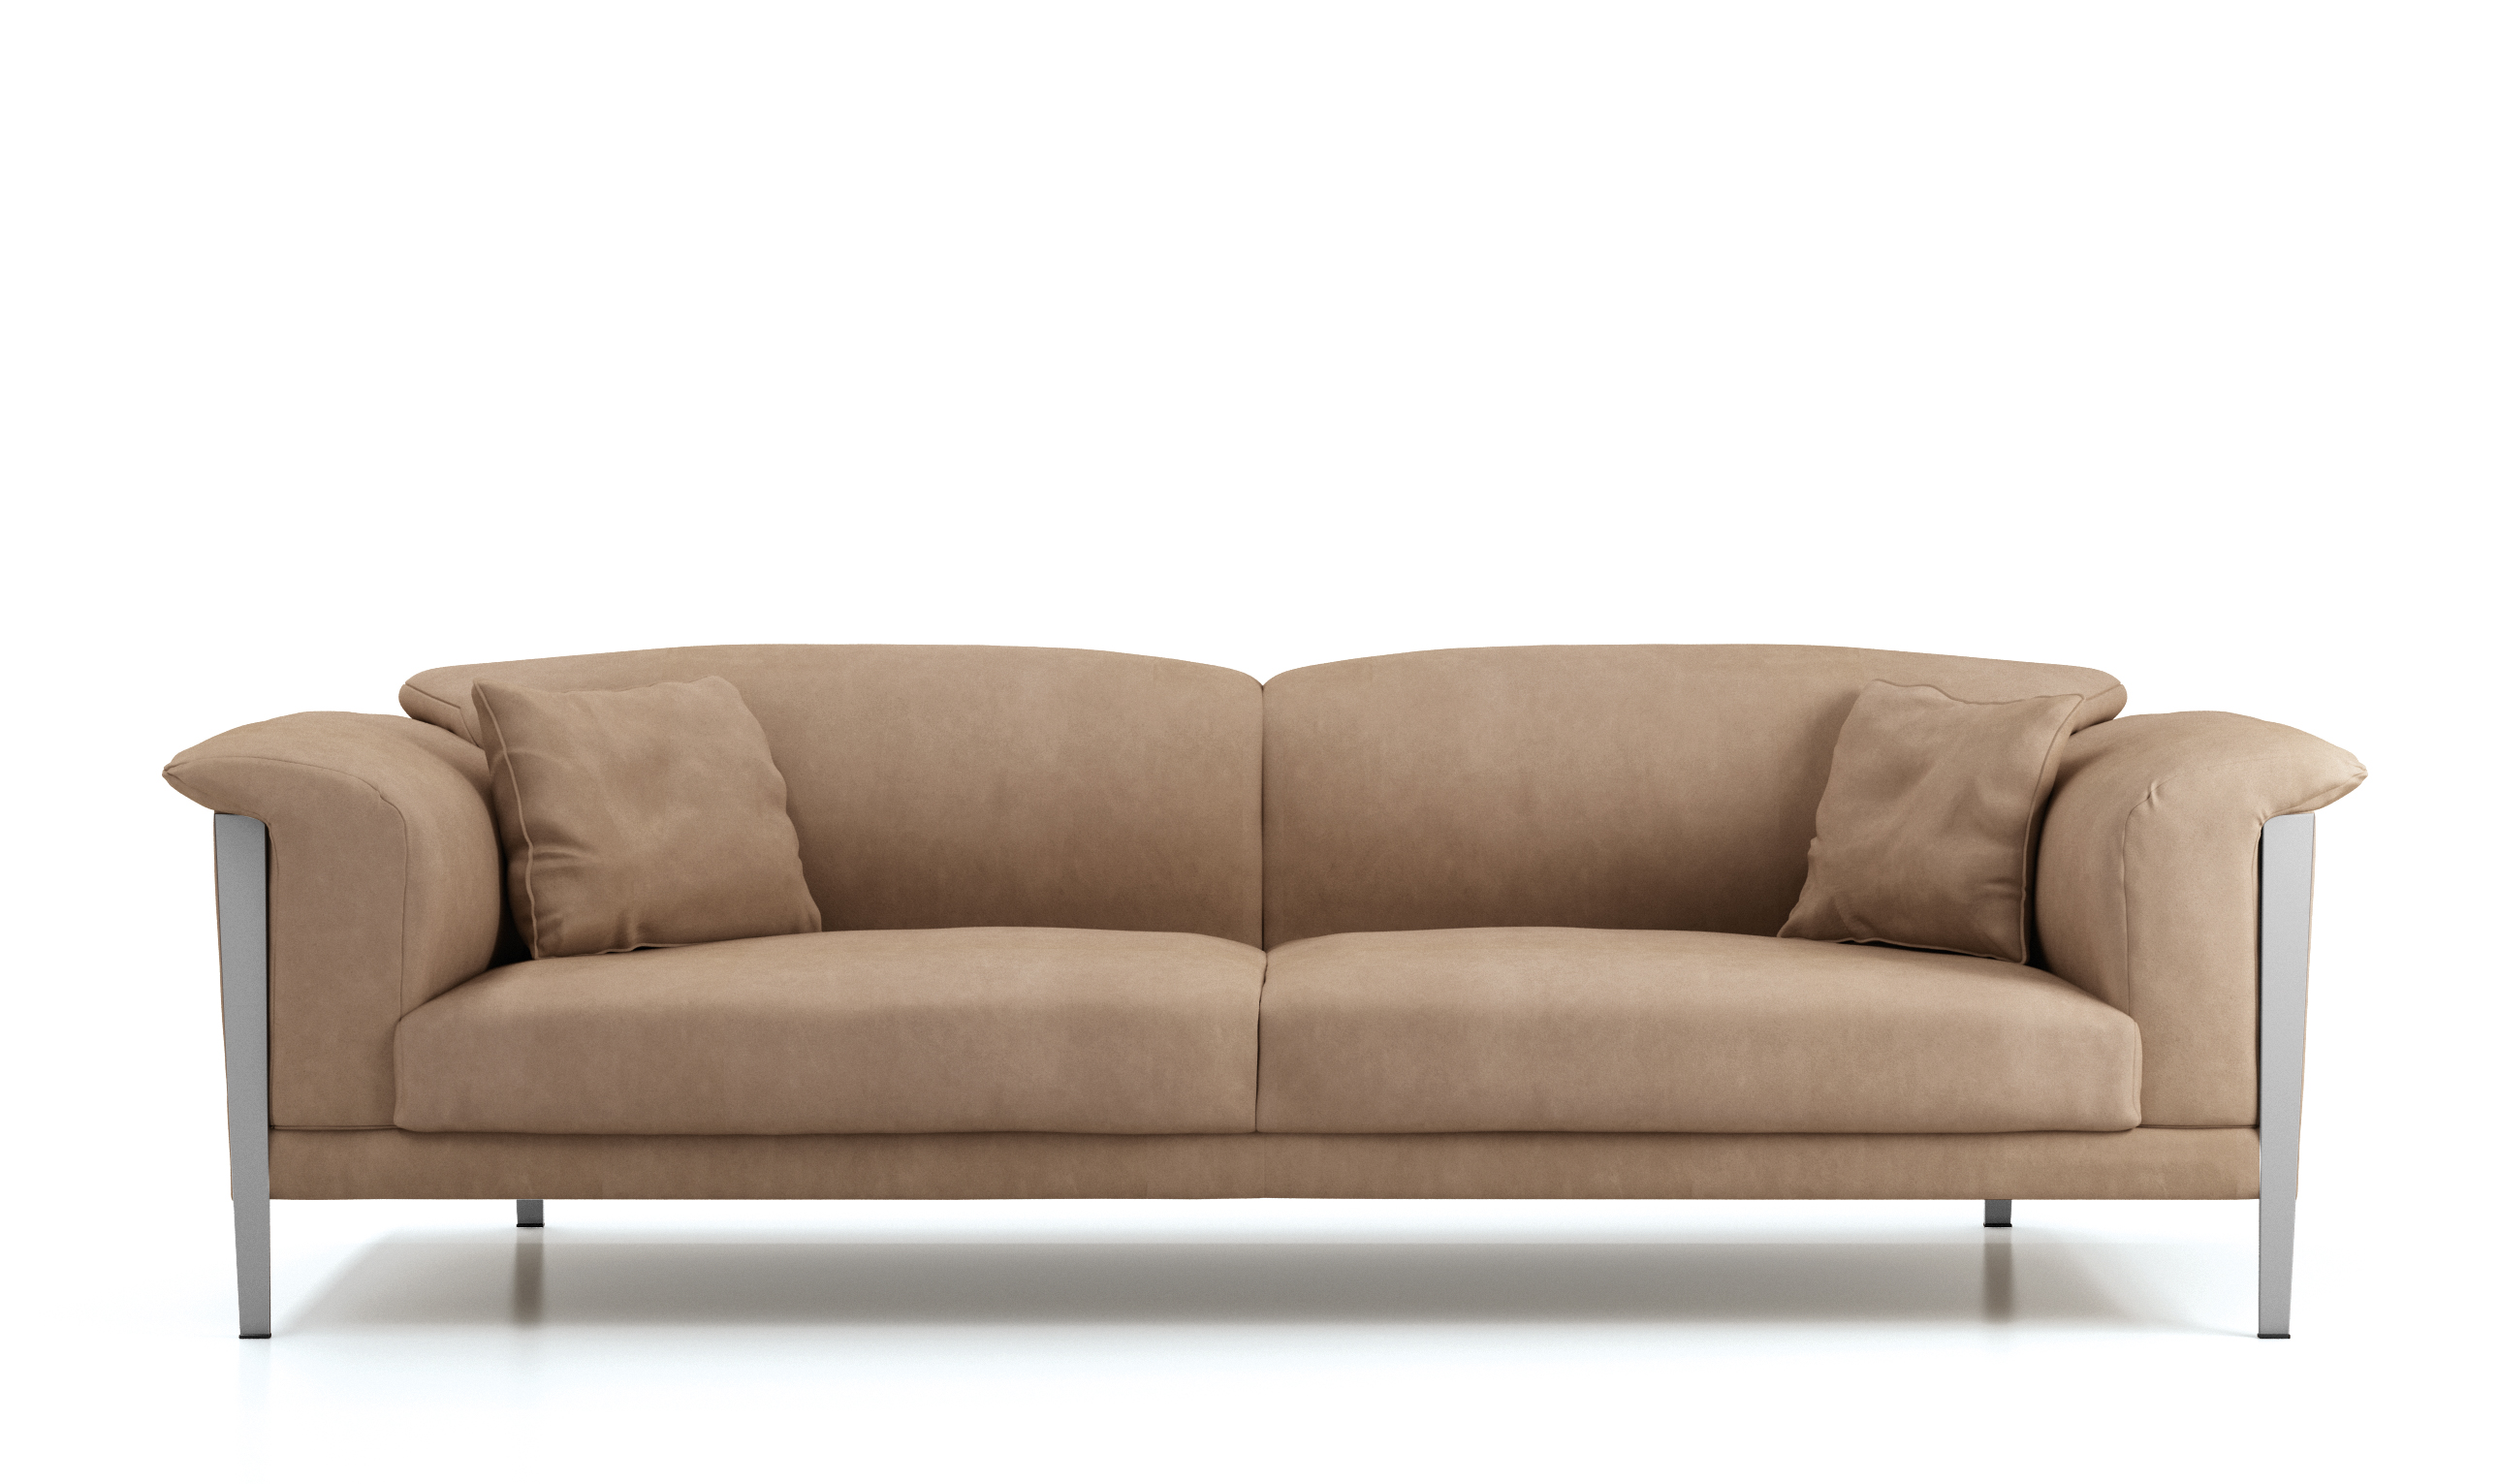 cream color leather reclining sofa